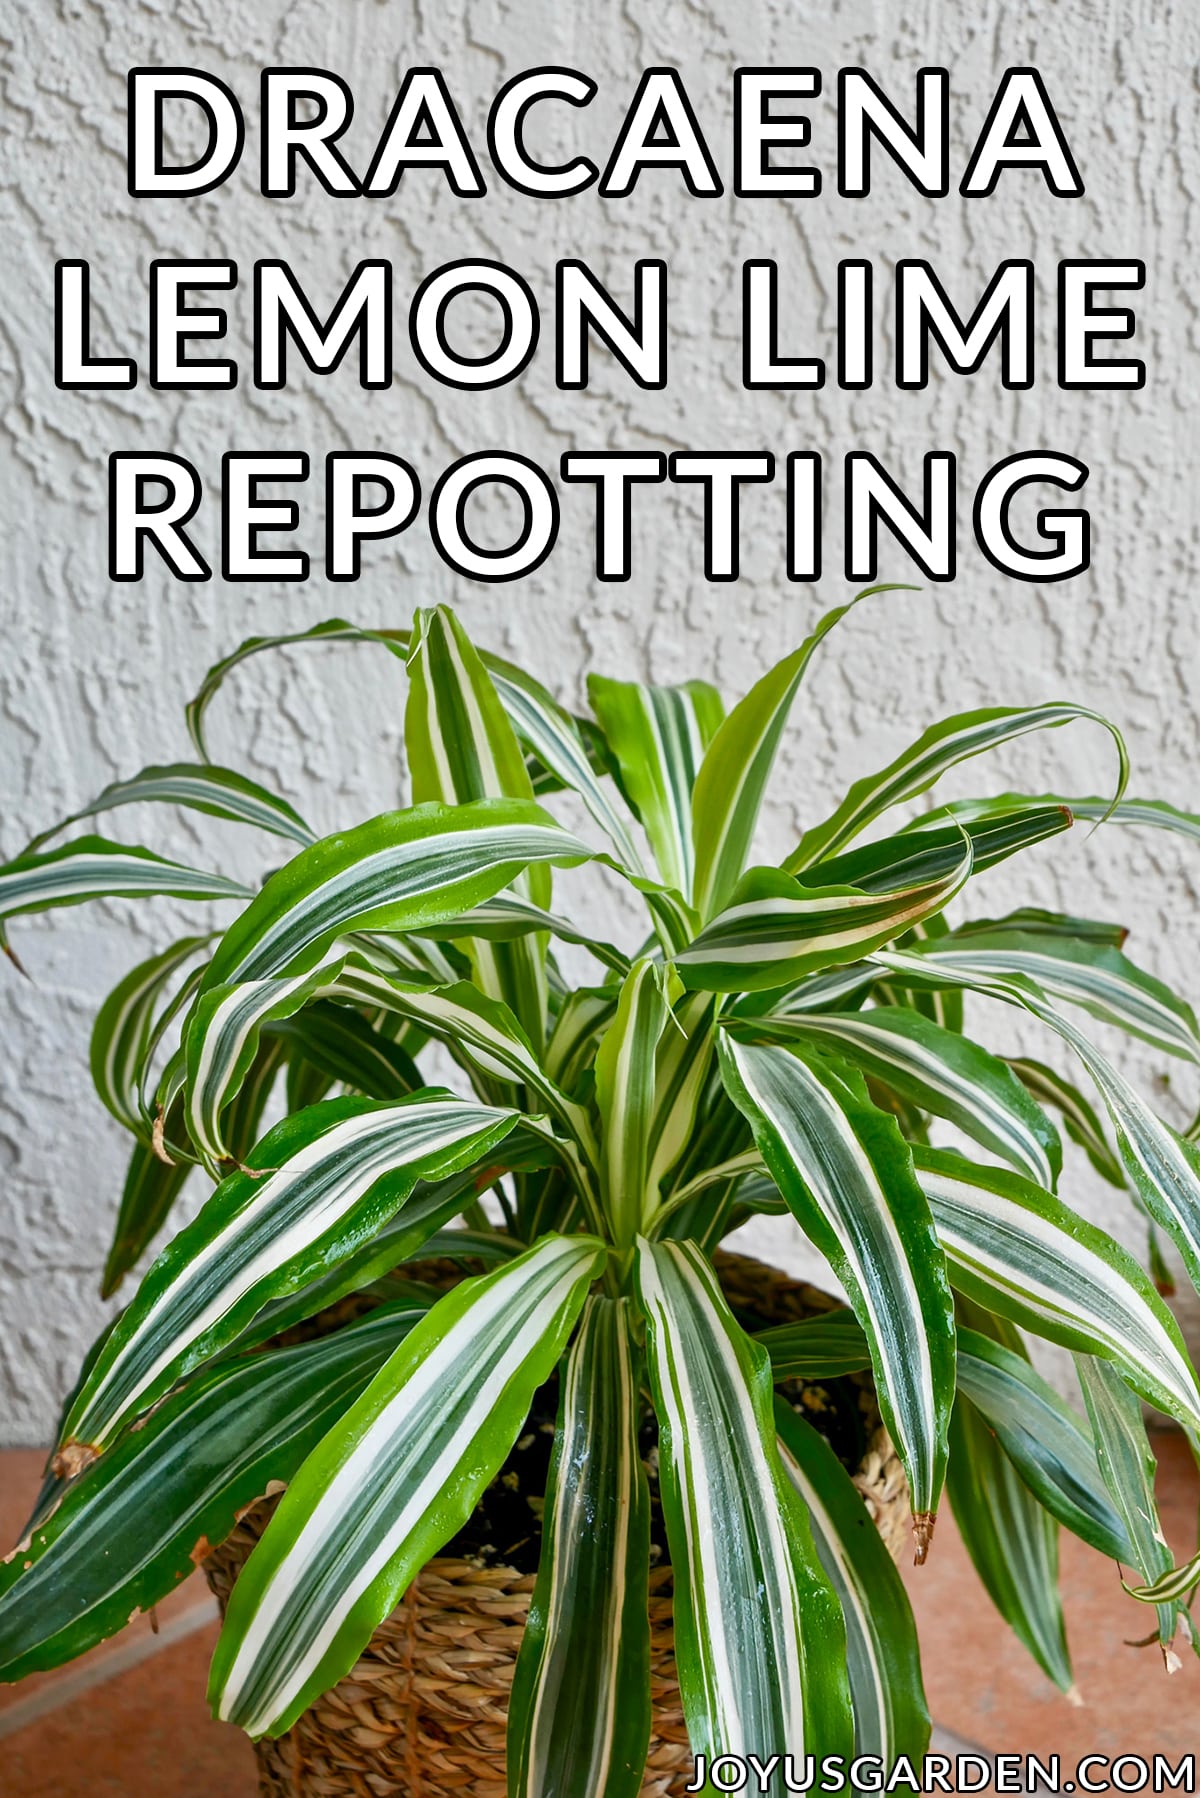  Dracaena Lemon Lime Repotting: The Mix To Use &amp; amp; Gavên To Take